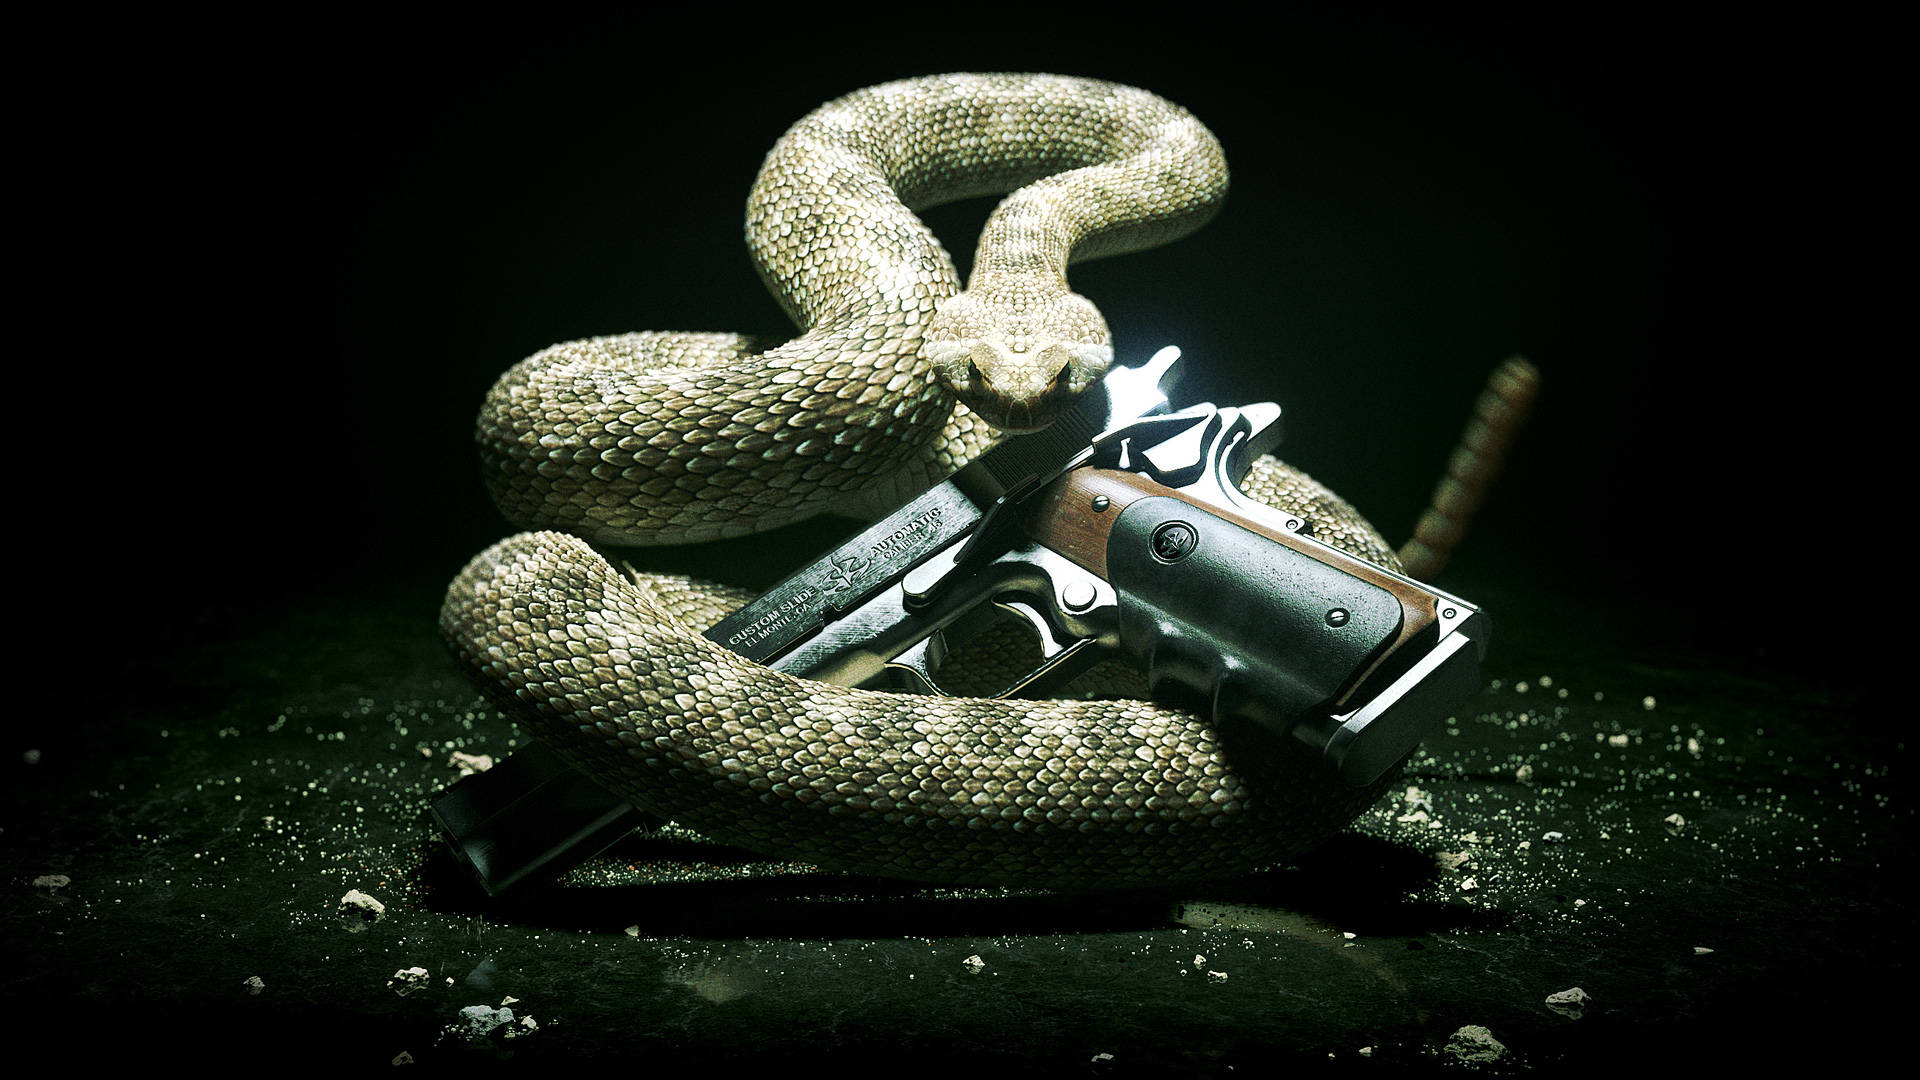 Hitman's Gun With Snake Background